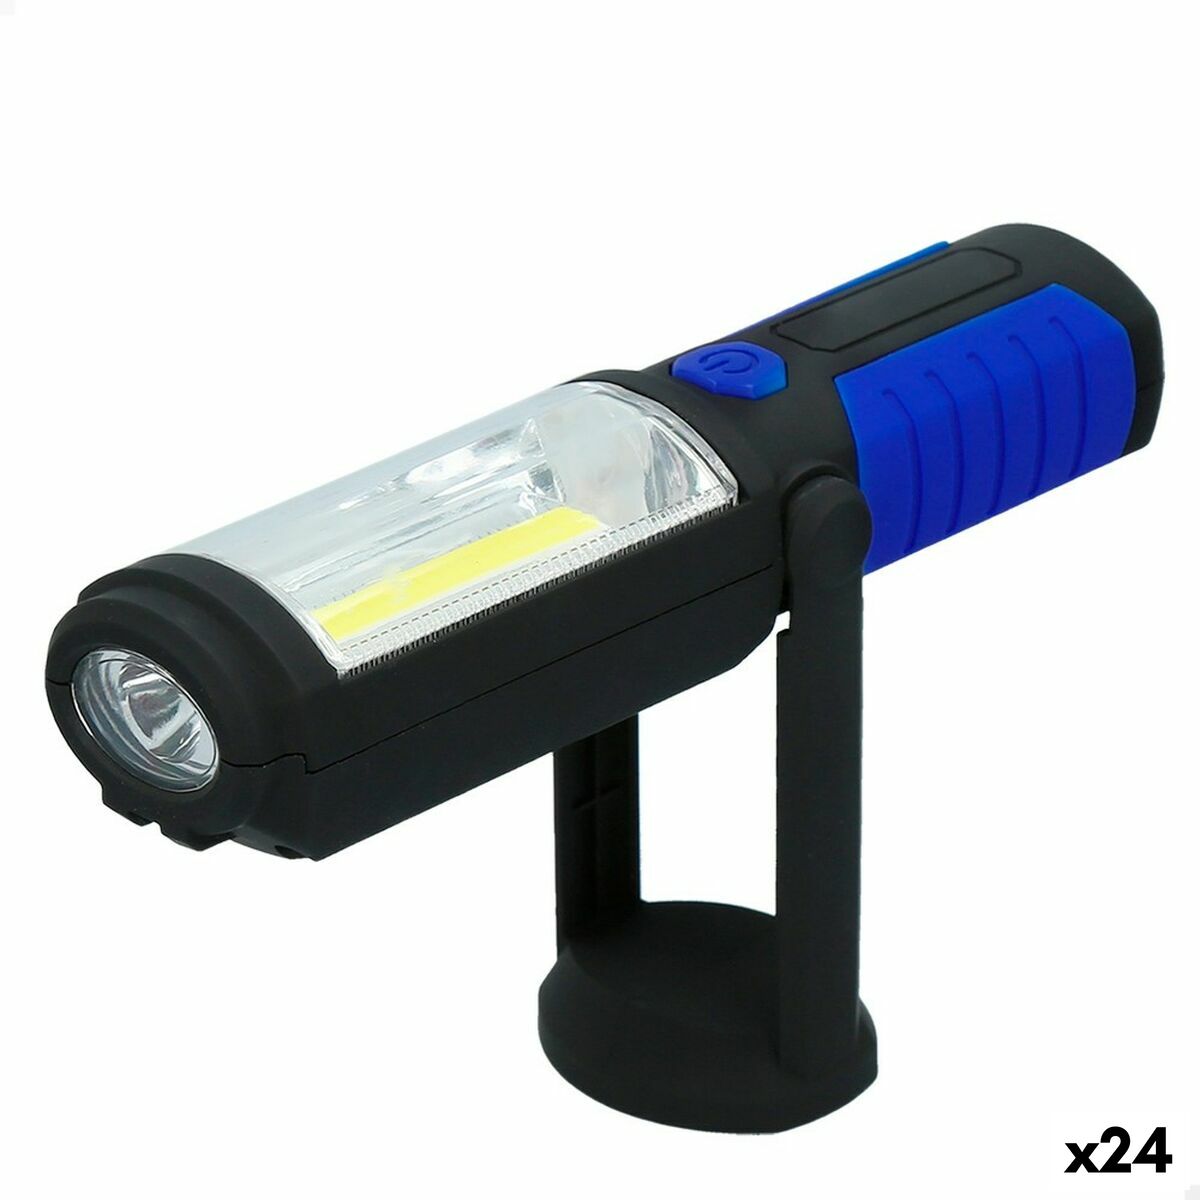 Torch LED Aktive Magnetic Adjustable (24 Units)